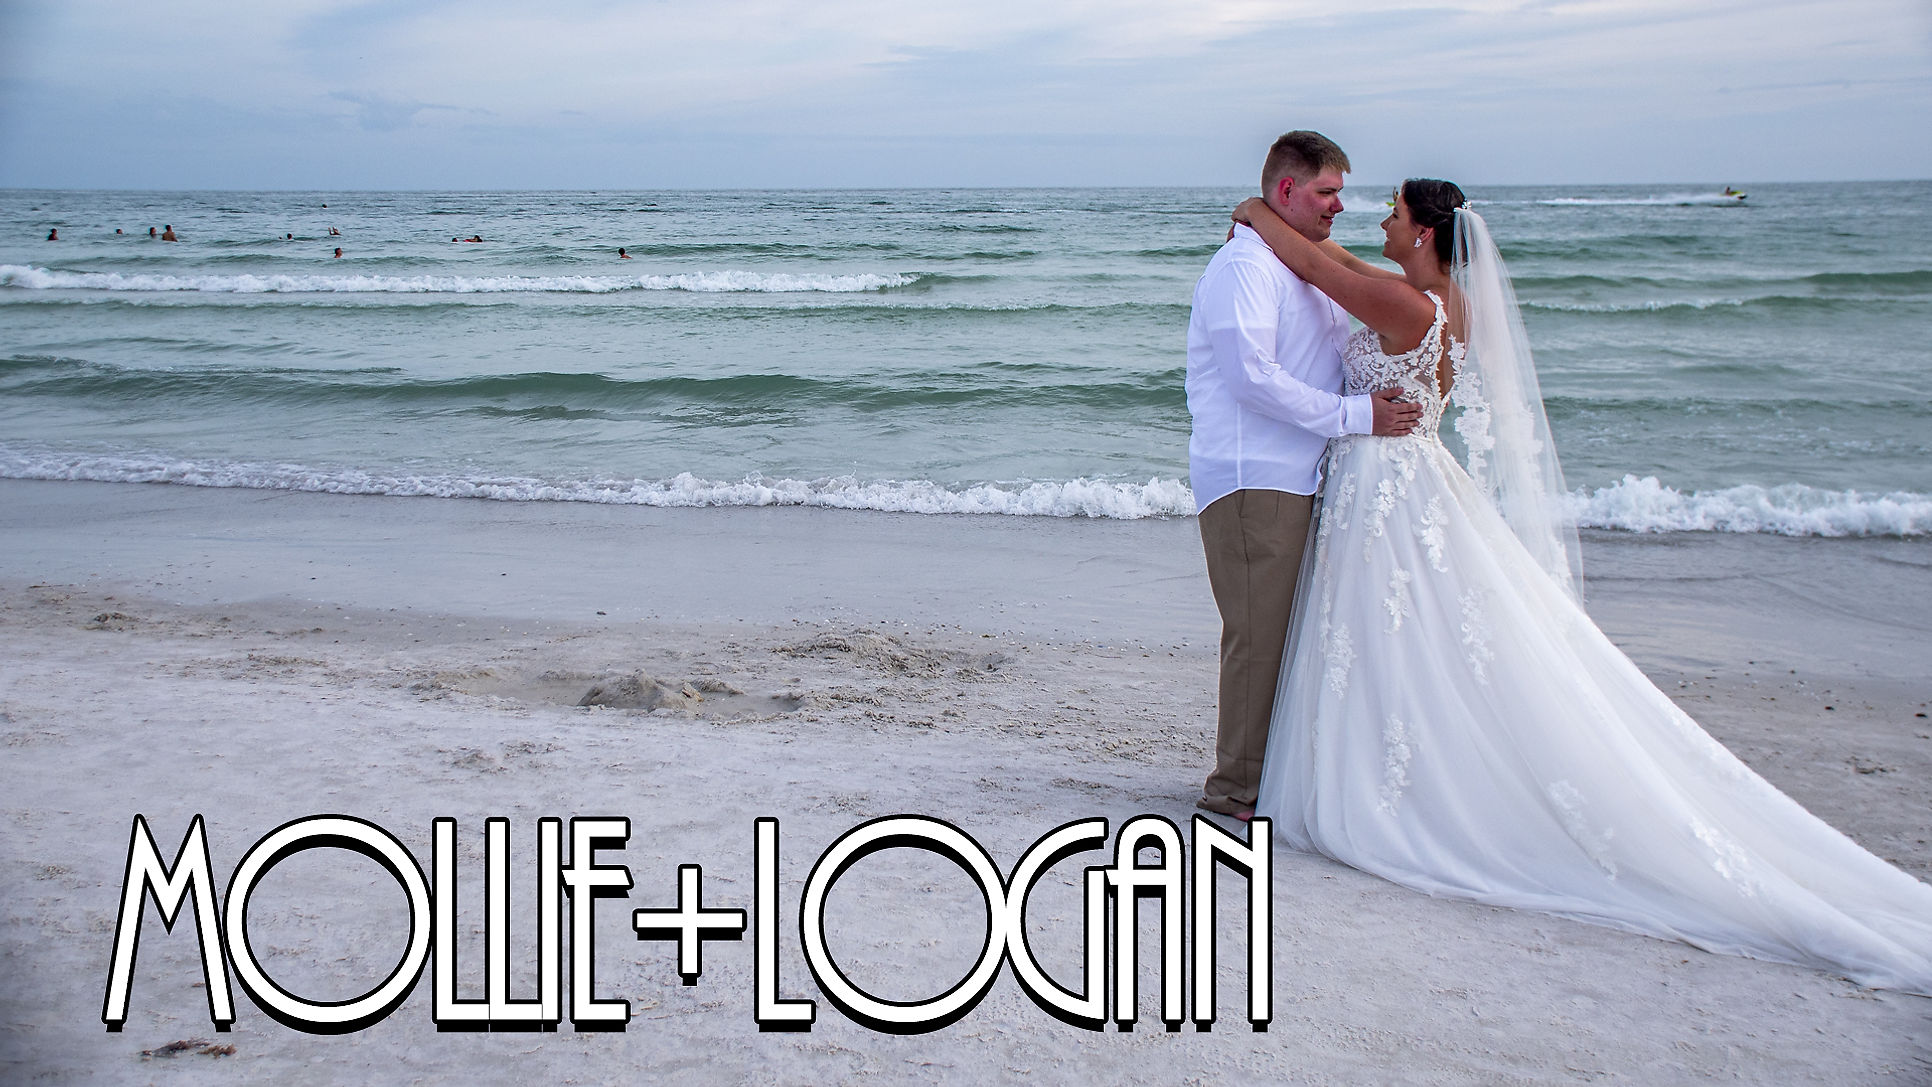 Mollie & Logan Ceremony Wedding Film